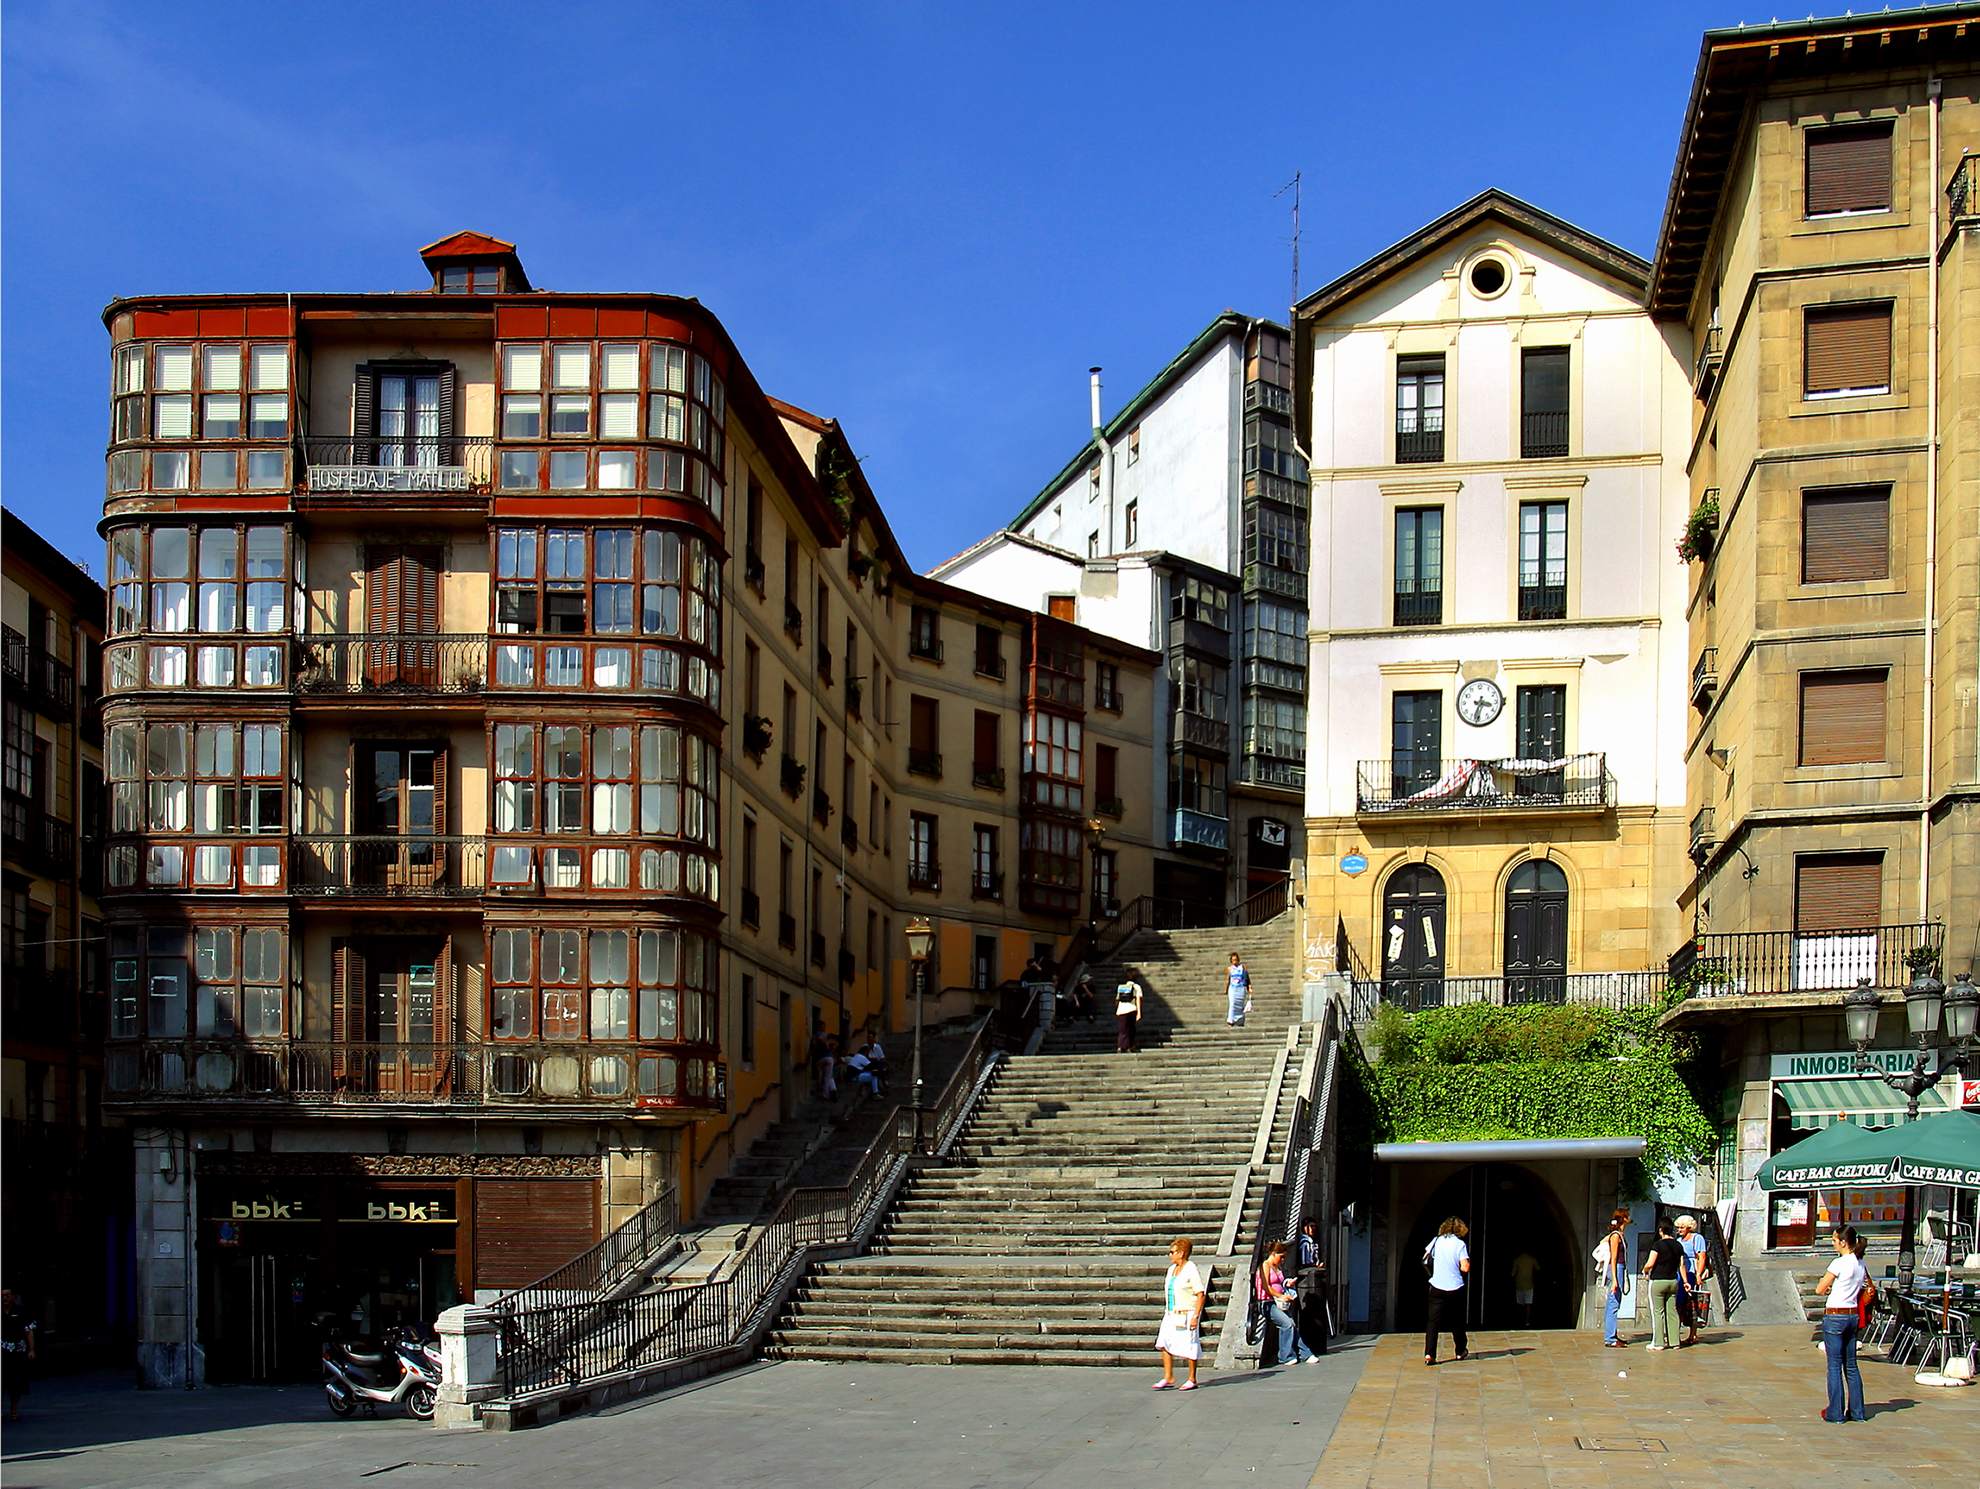 Casco viejo Bilbao